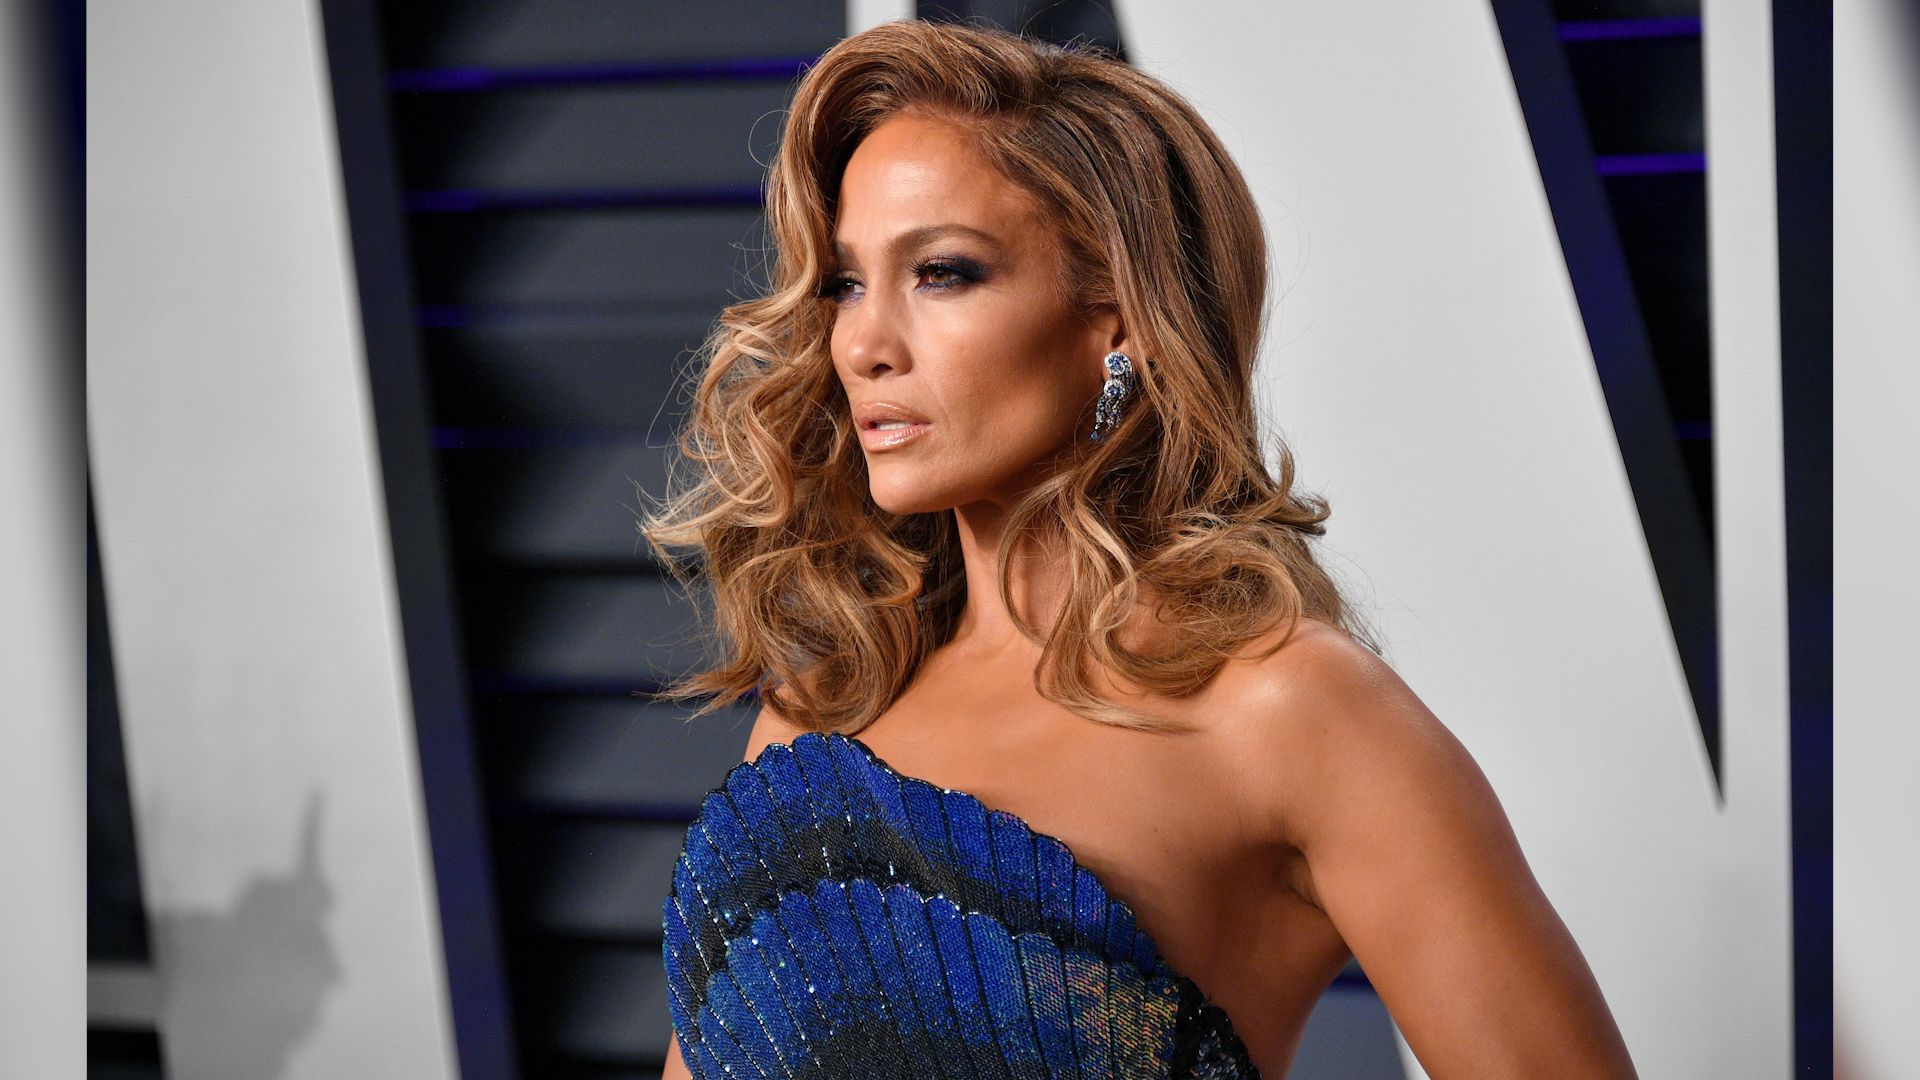 Jennifer Lopez Singer New 2021 Wallpapers